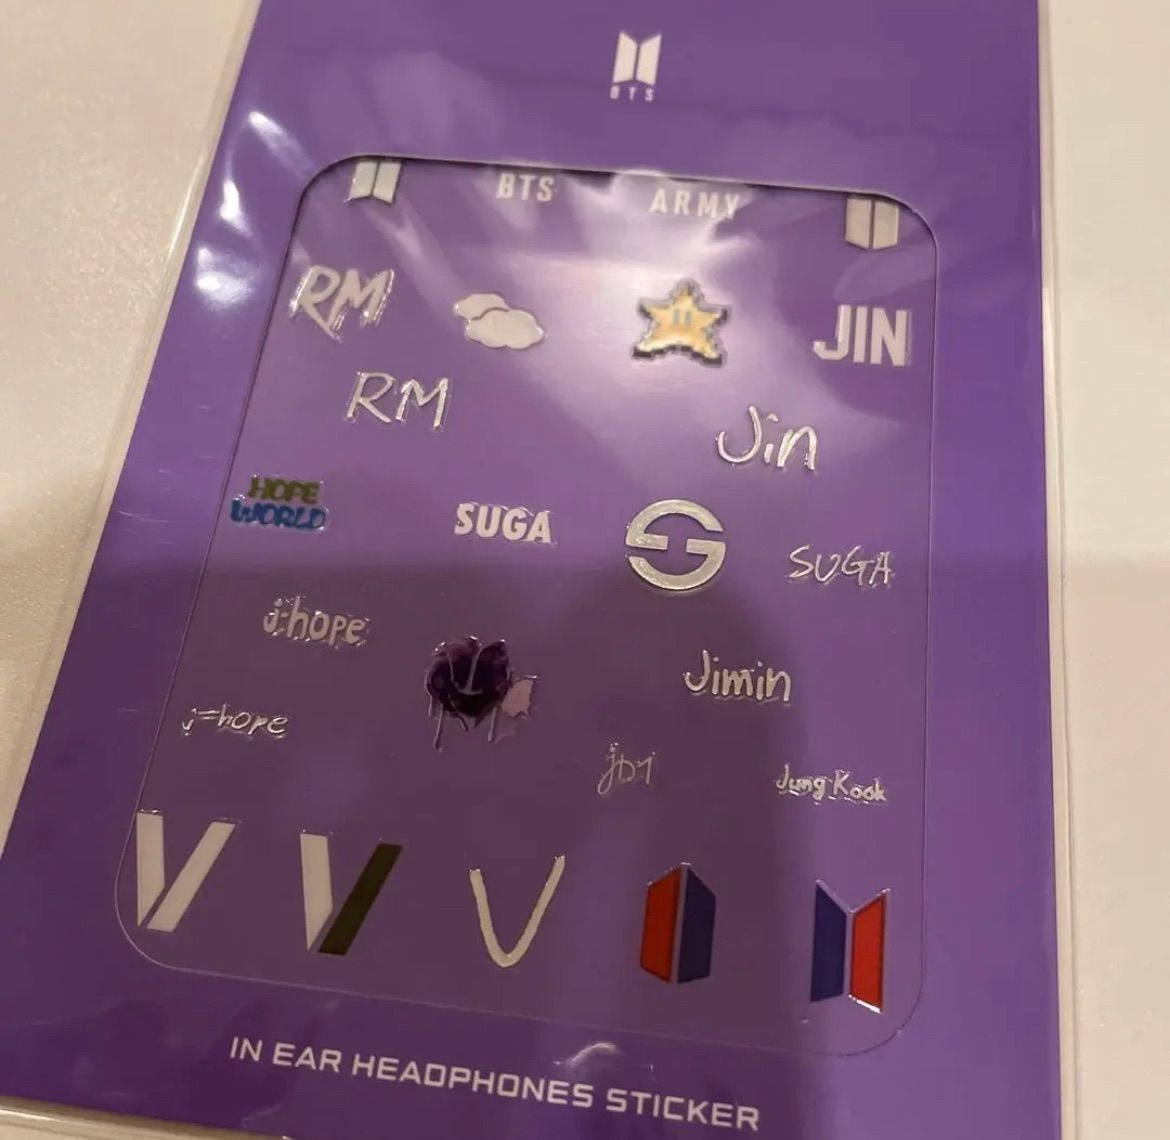 BTS  BTS In-Ear Headphones Sticker